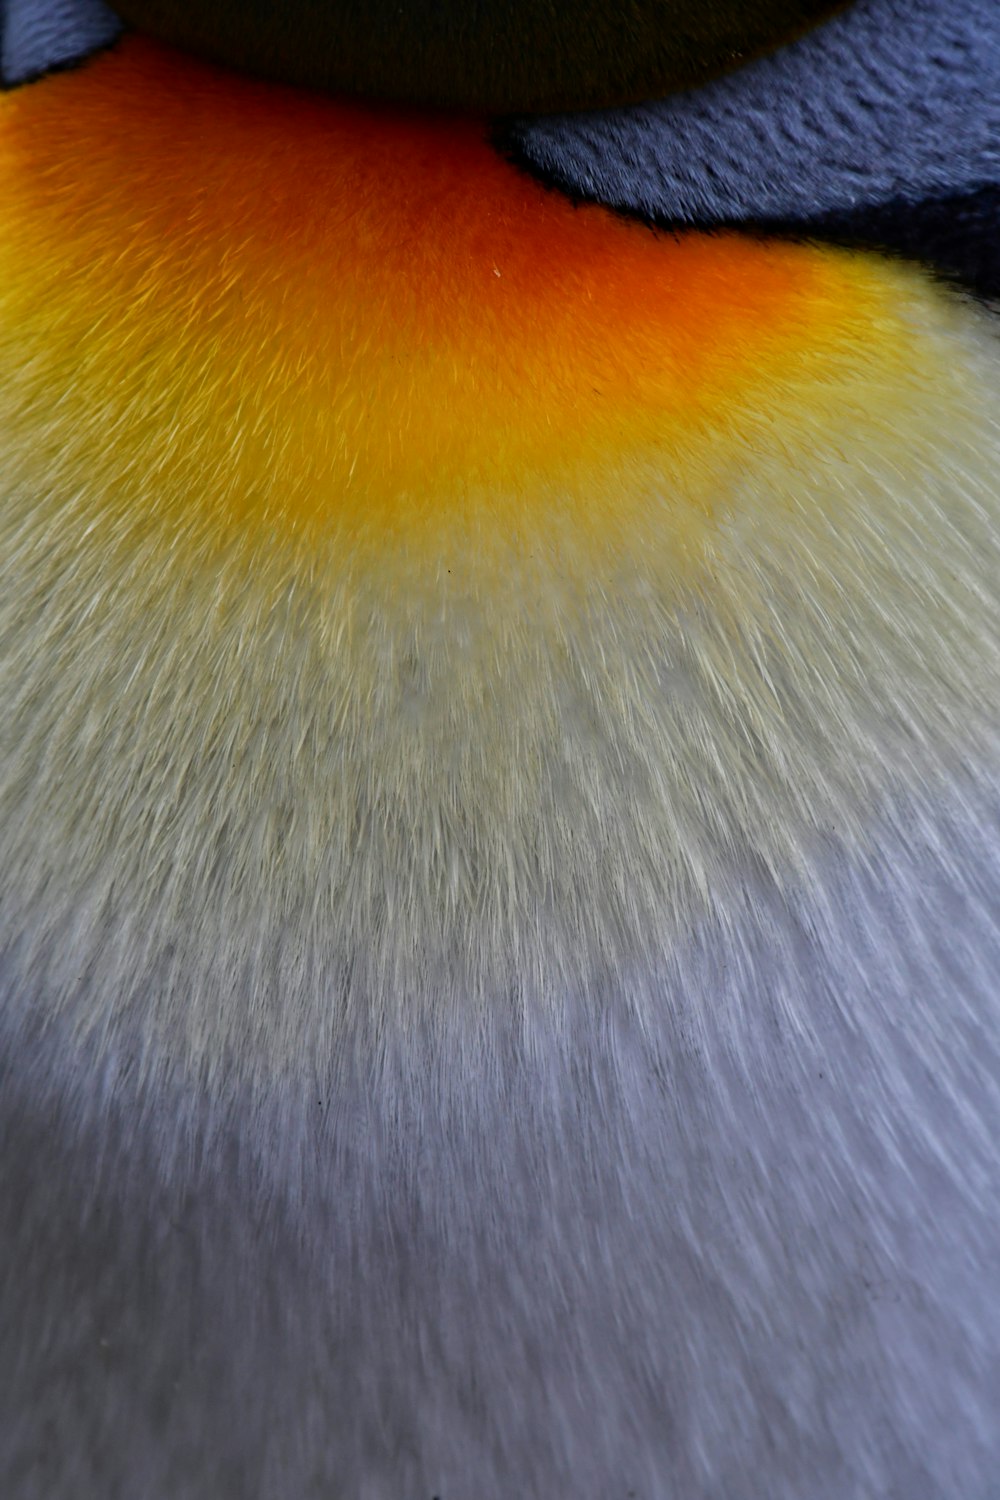 a close up of a colorful bird's fur